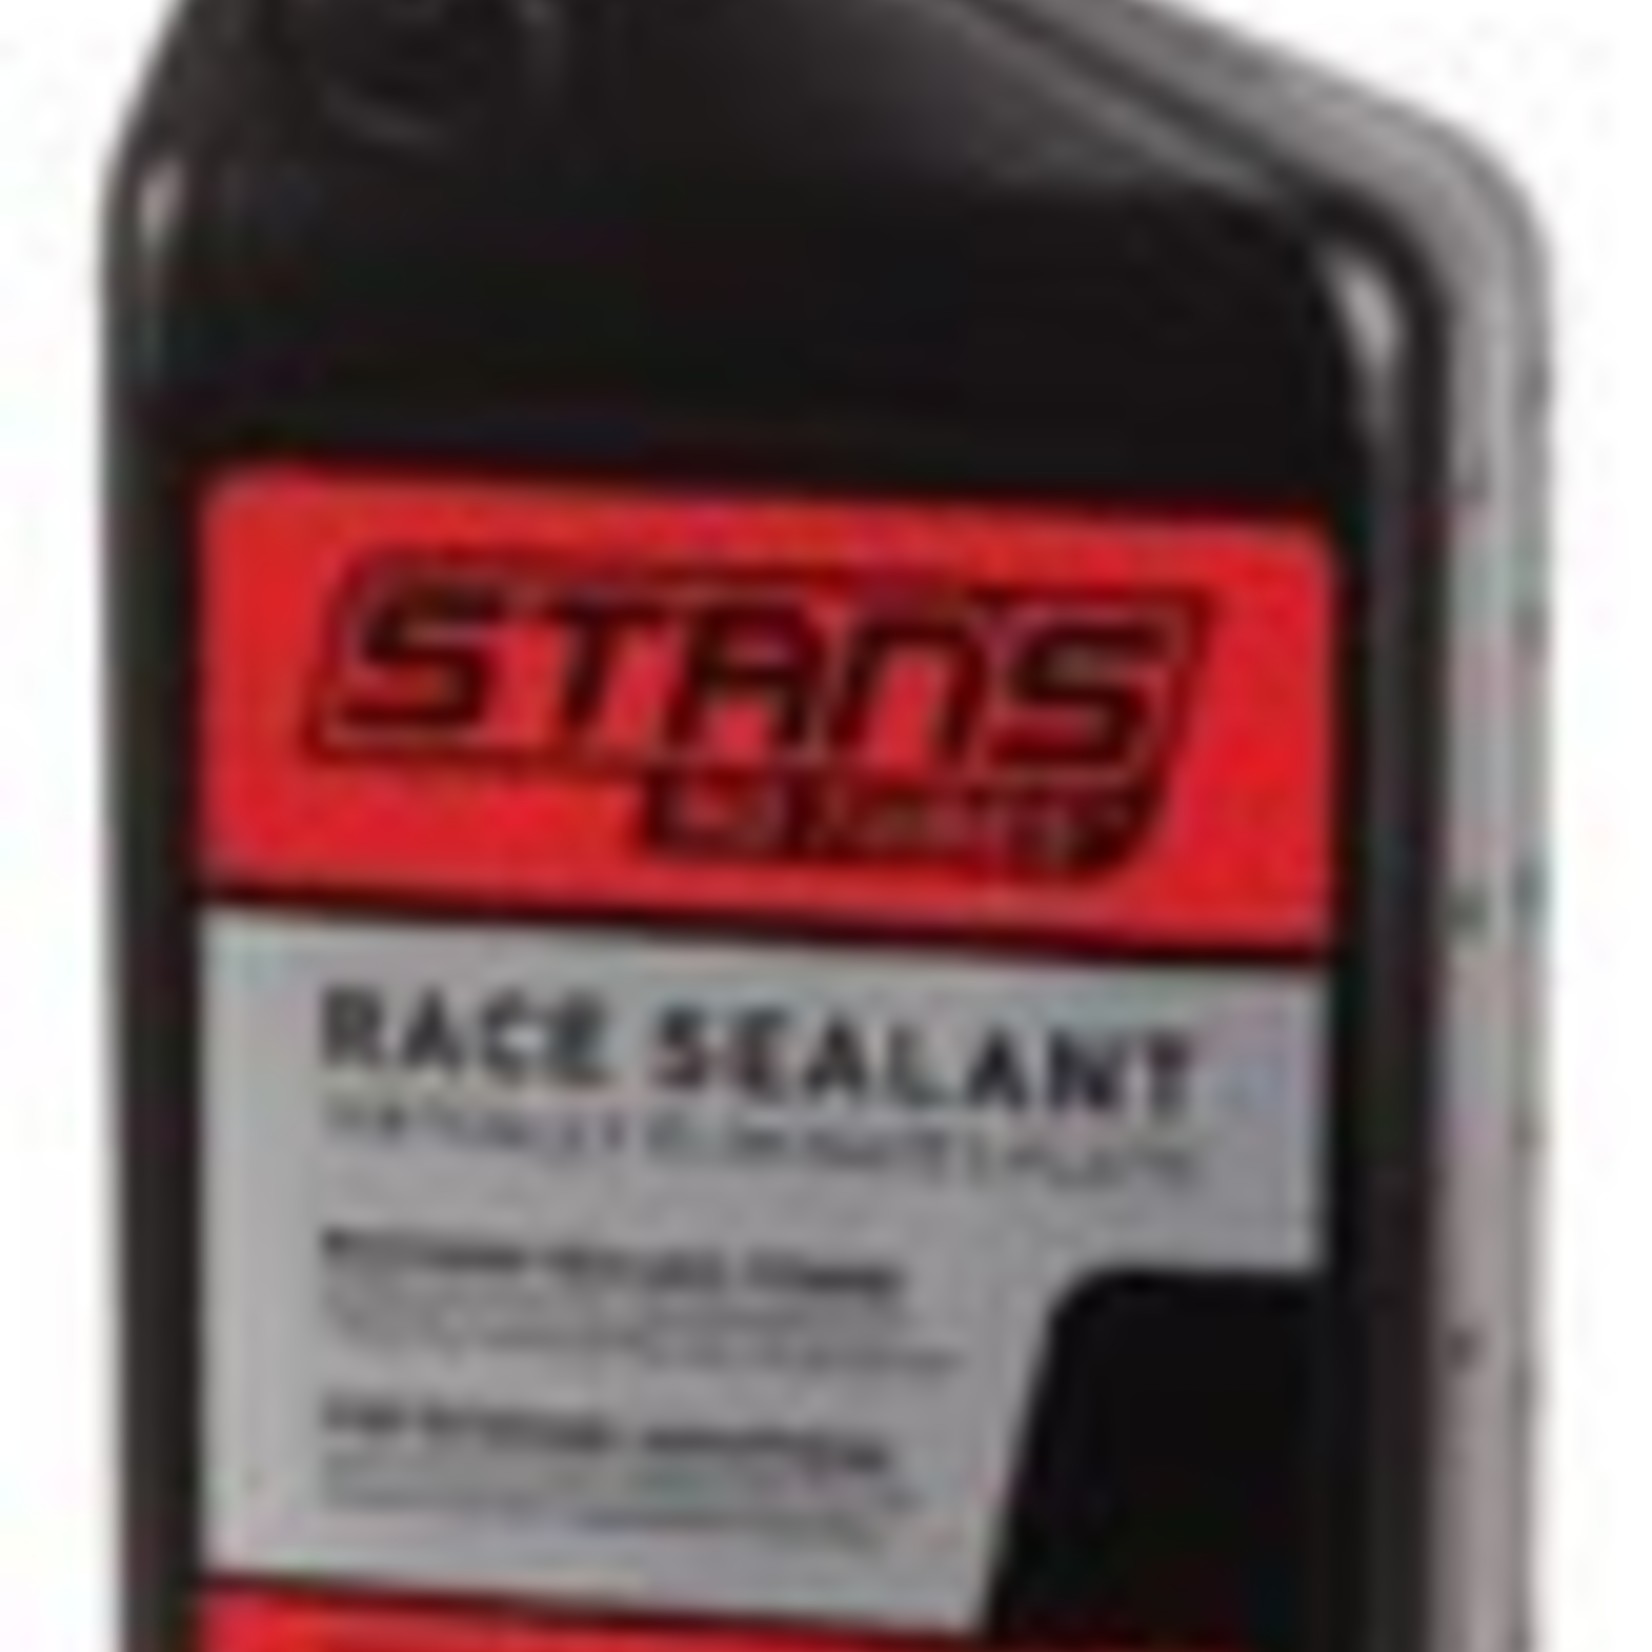 Stans Race rim and tire sealant, quart (32oz) with flip top